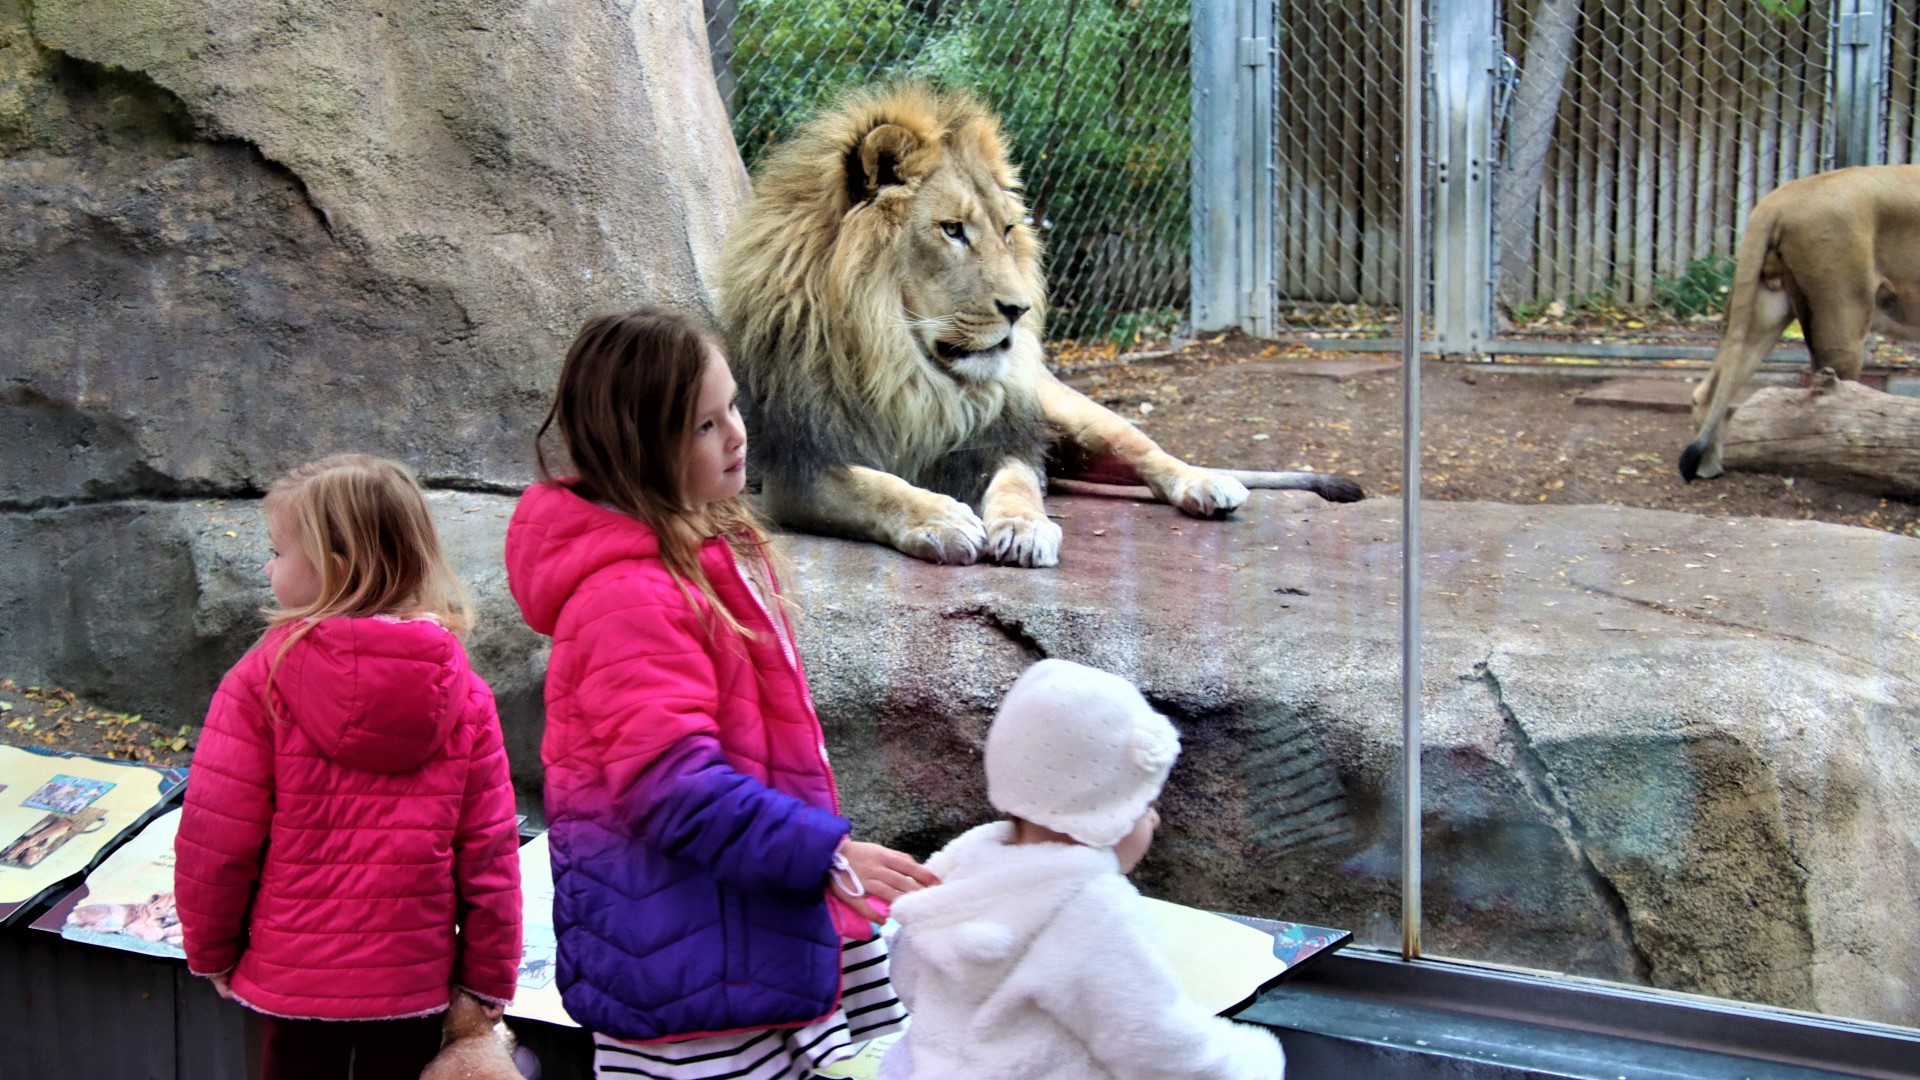 Denver Zoo 'Free Days' start in January